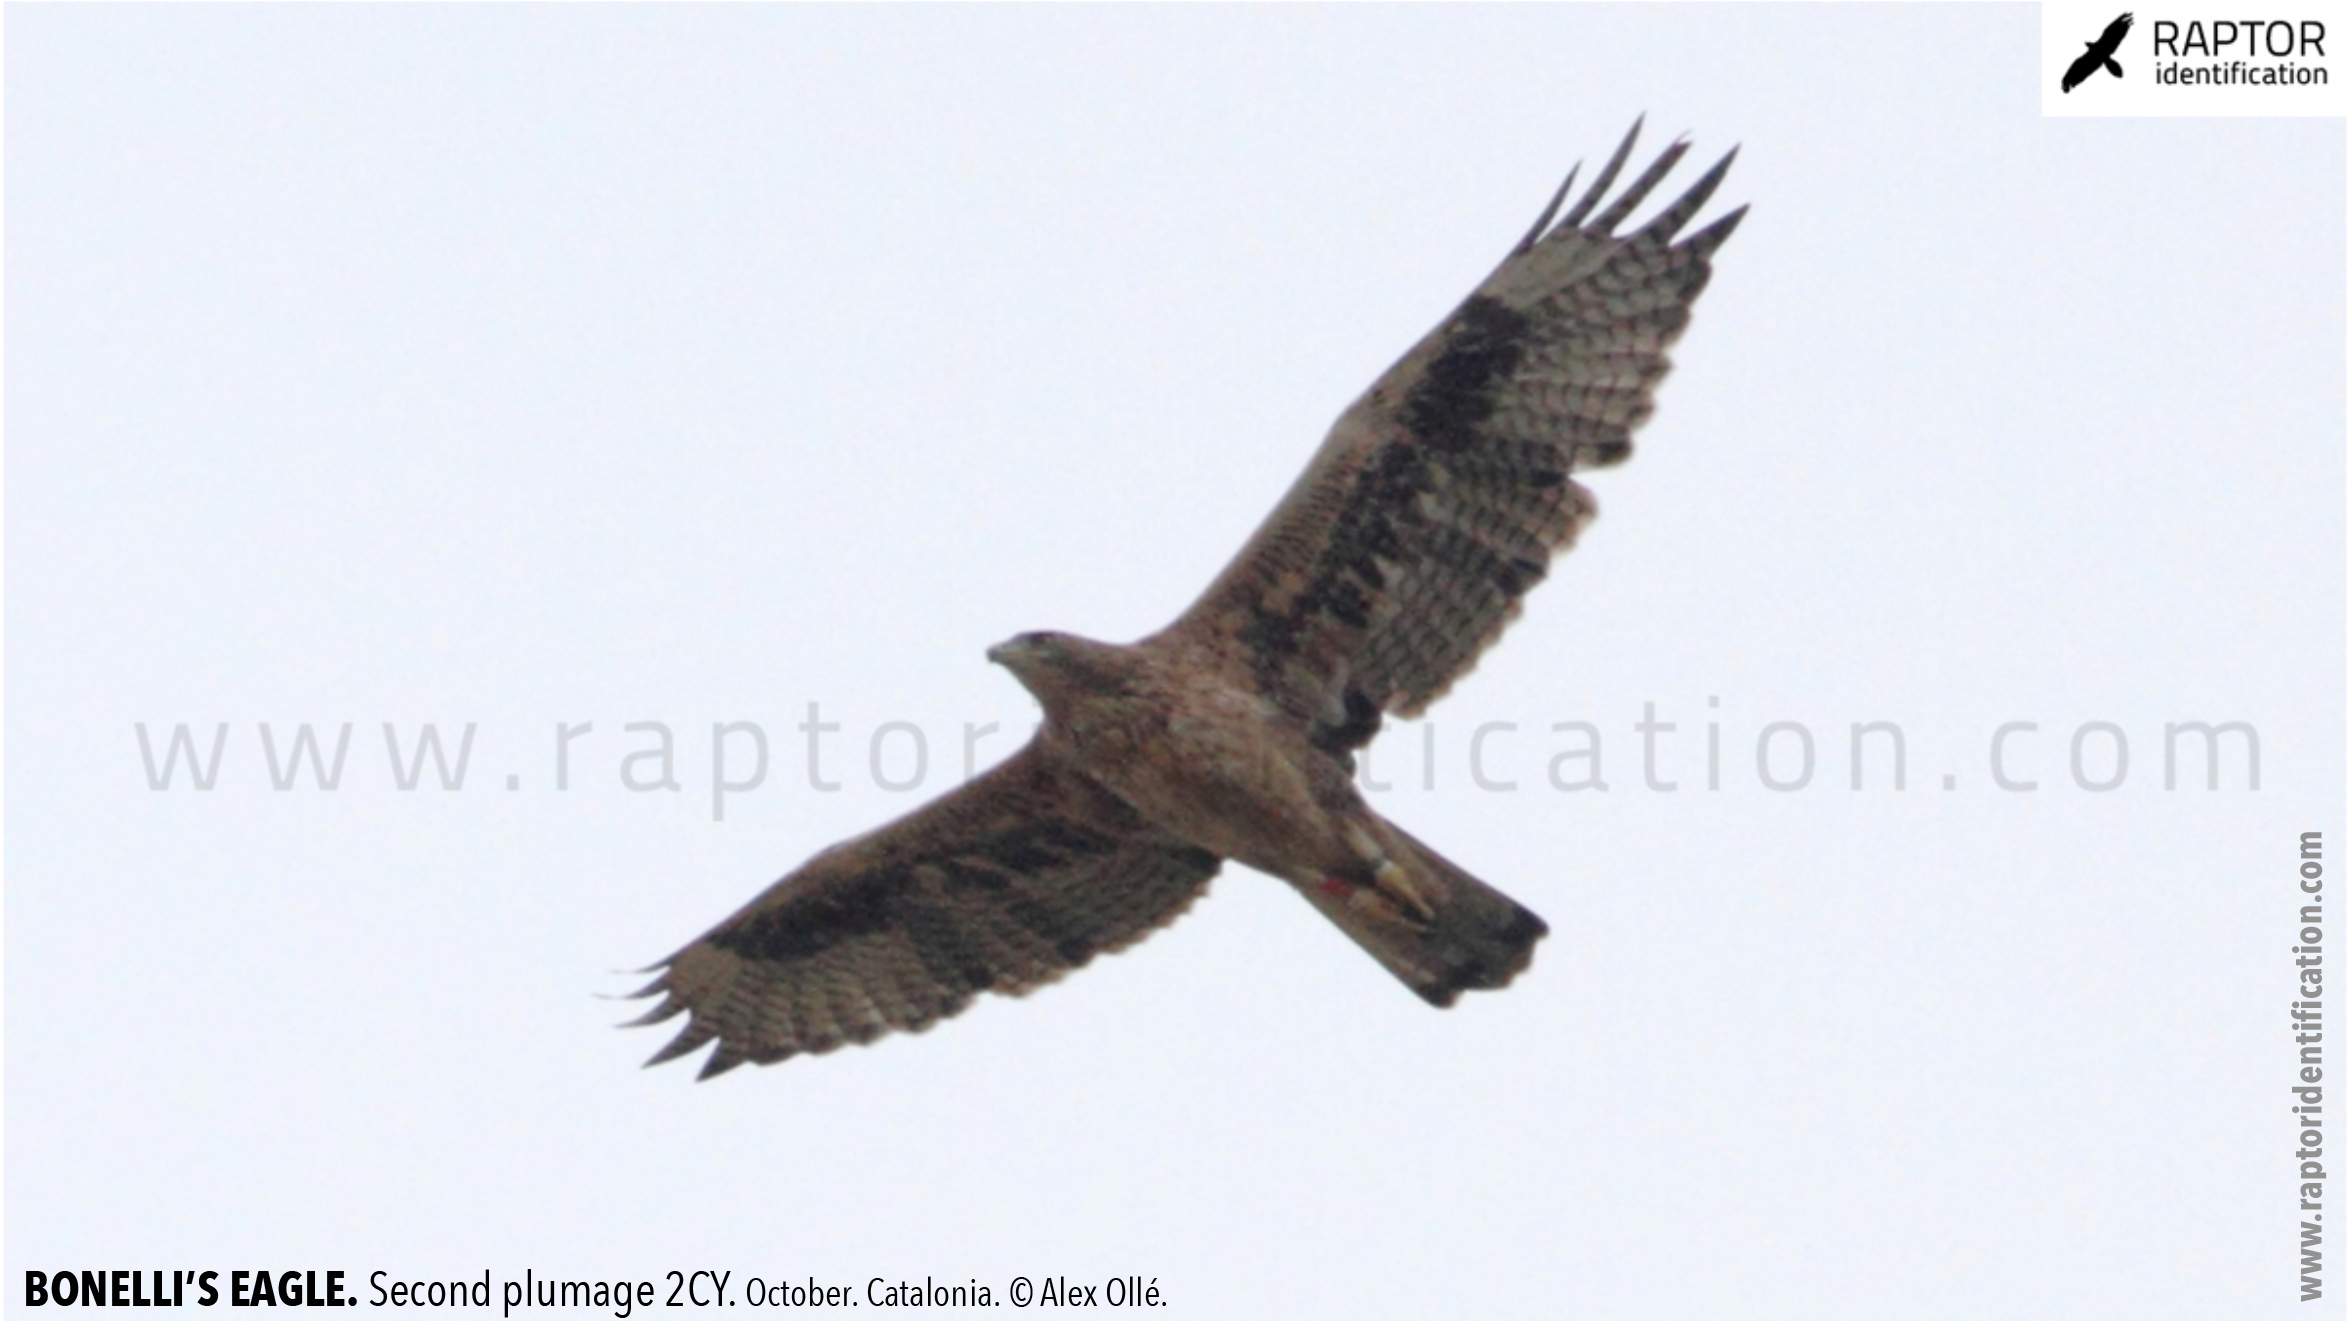 Bonellis-Eagle-2nd-plumage-identification